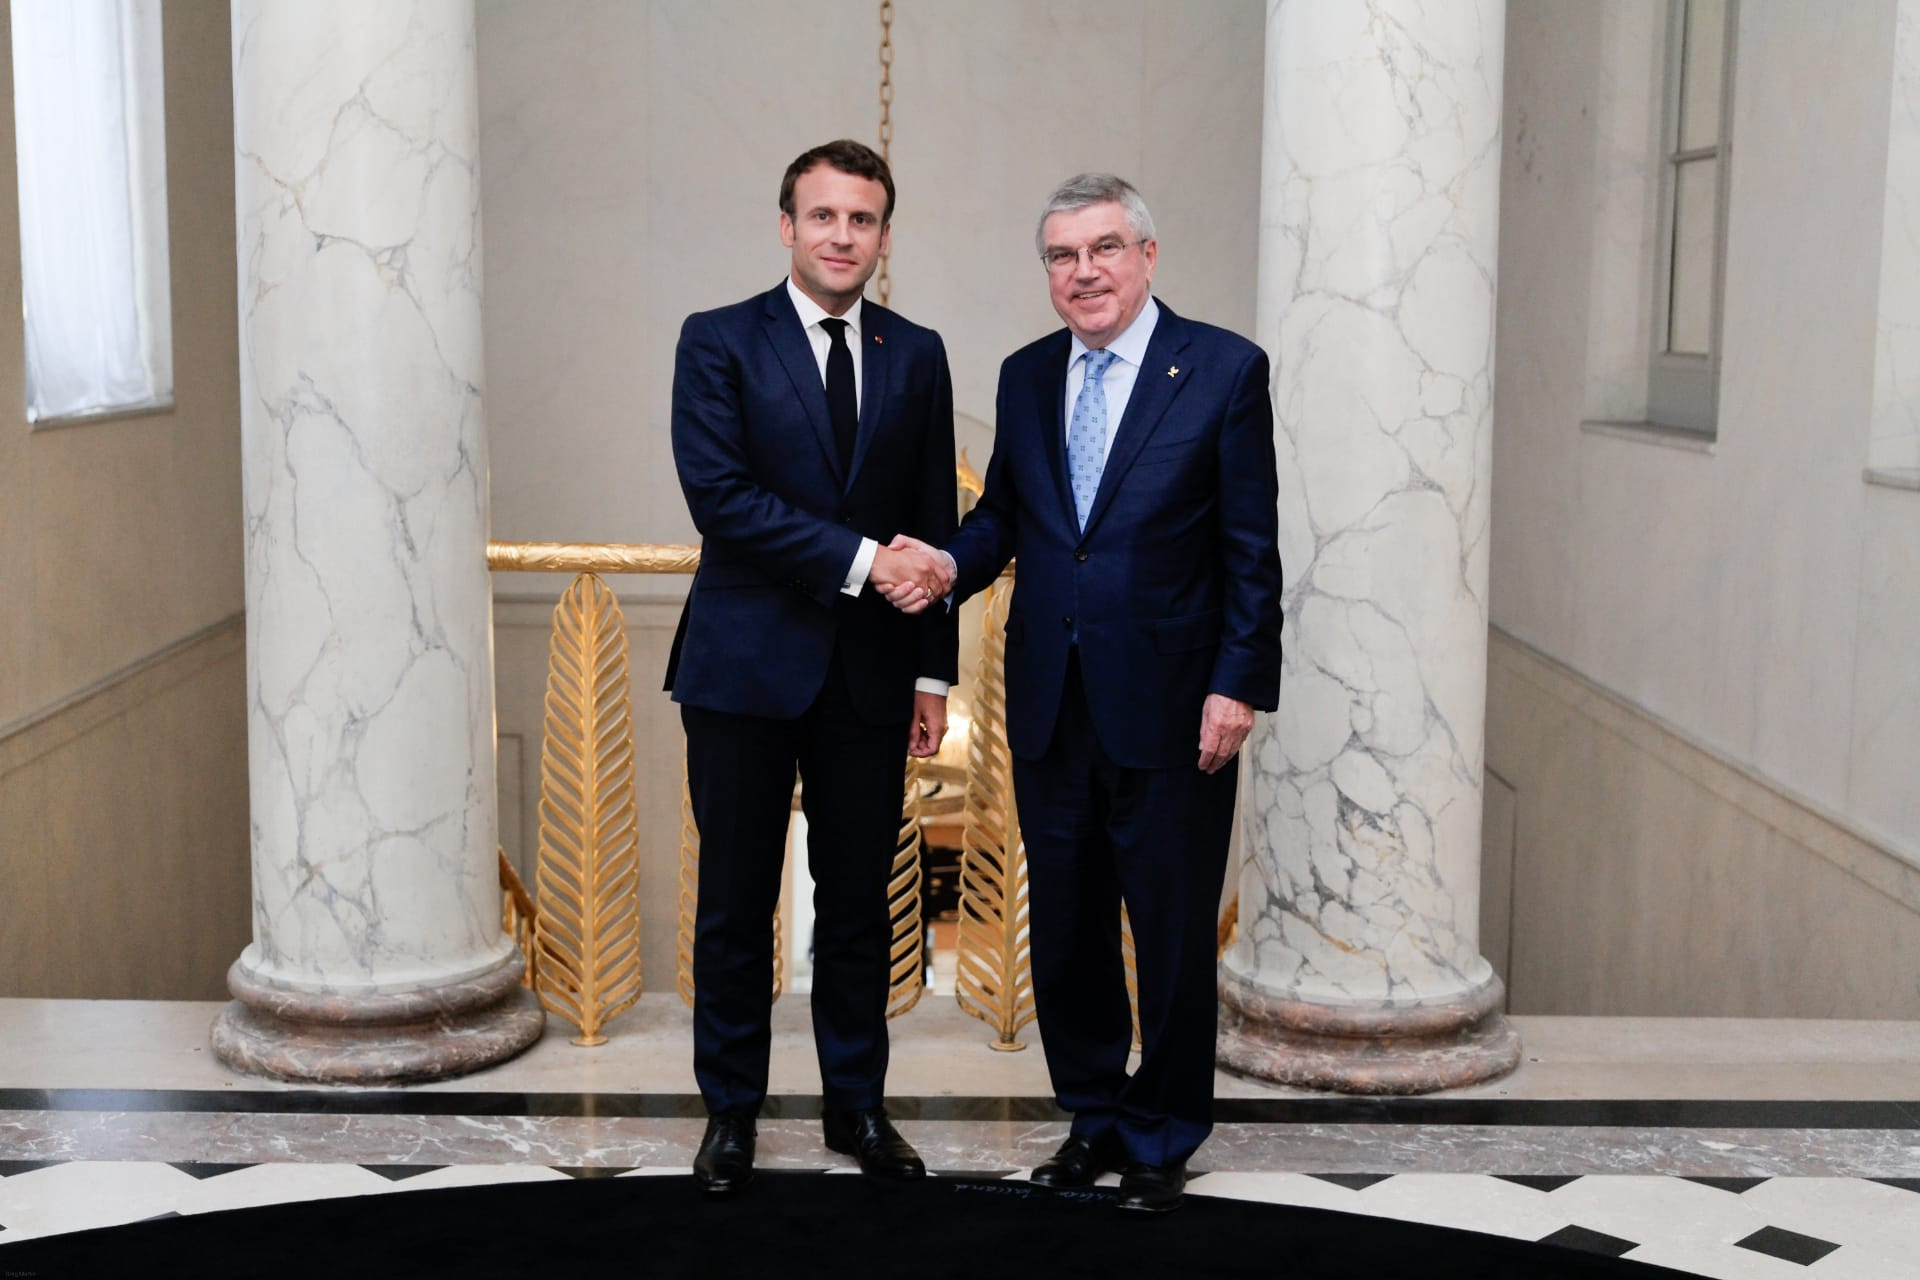 Paris 2024 high on agenda as Macron welcomes Bach to Élysée Palace